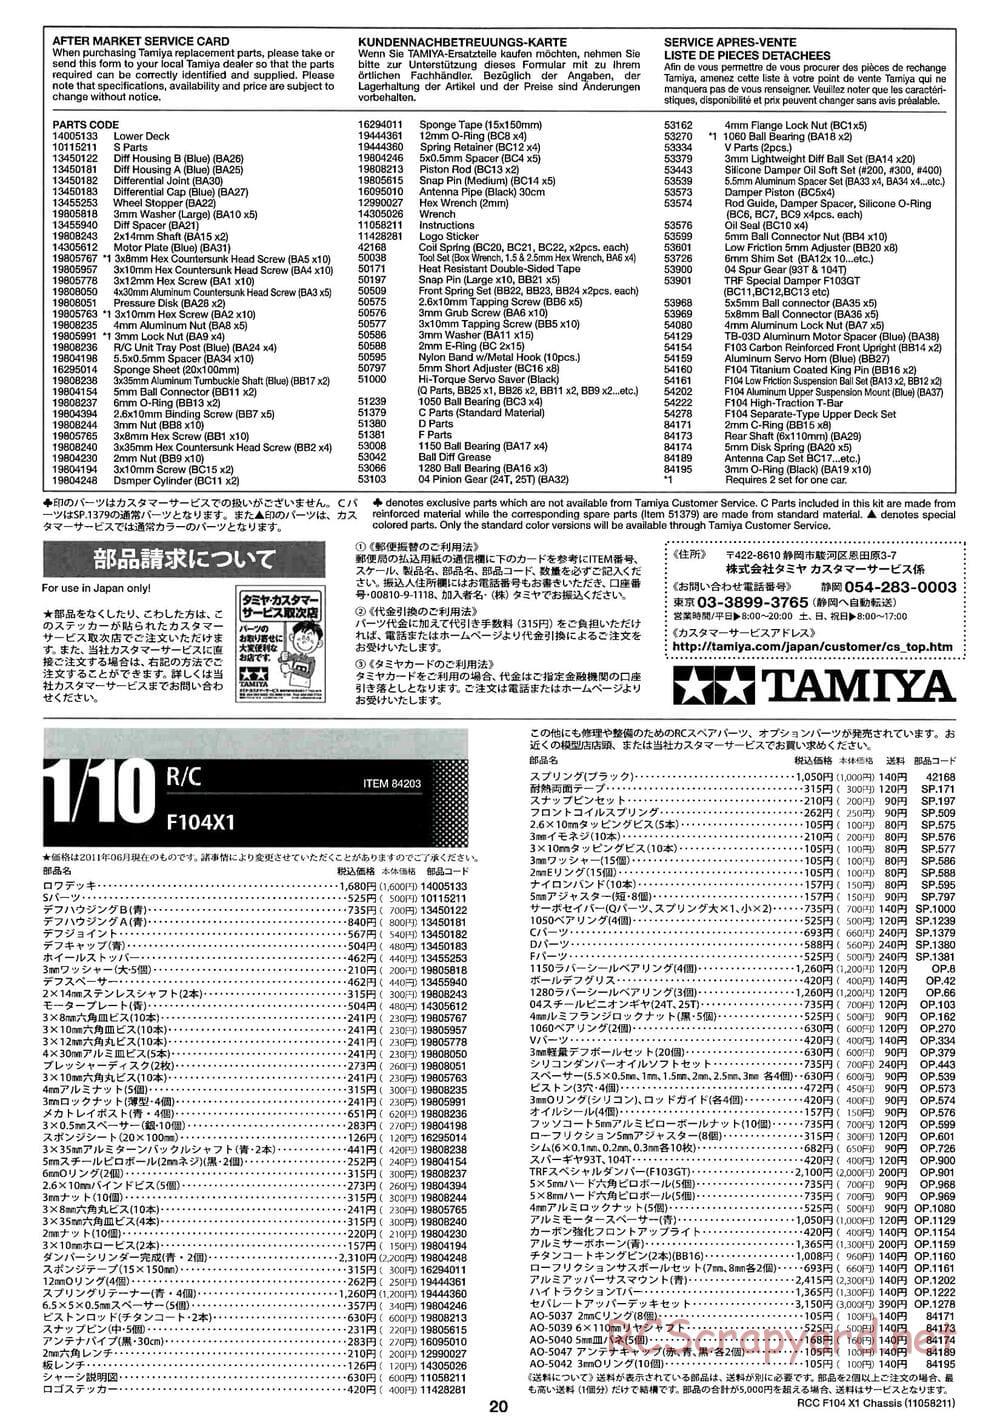 Tamiya - F104X1 Chassis - Manual - Page 20